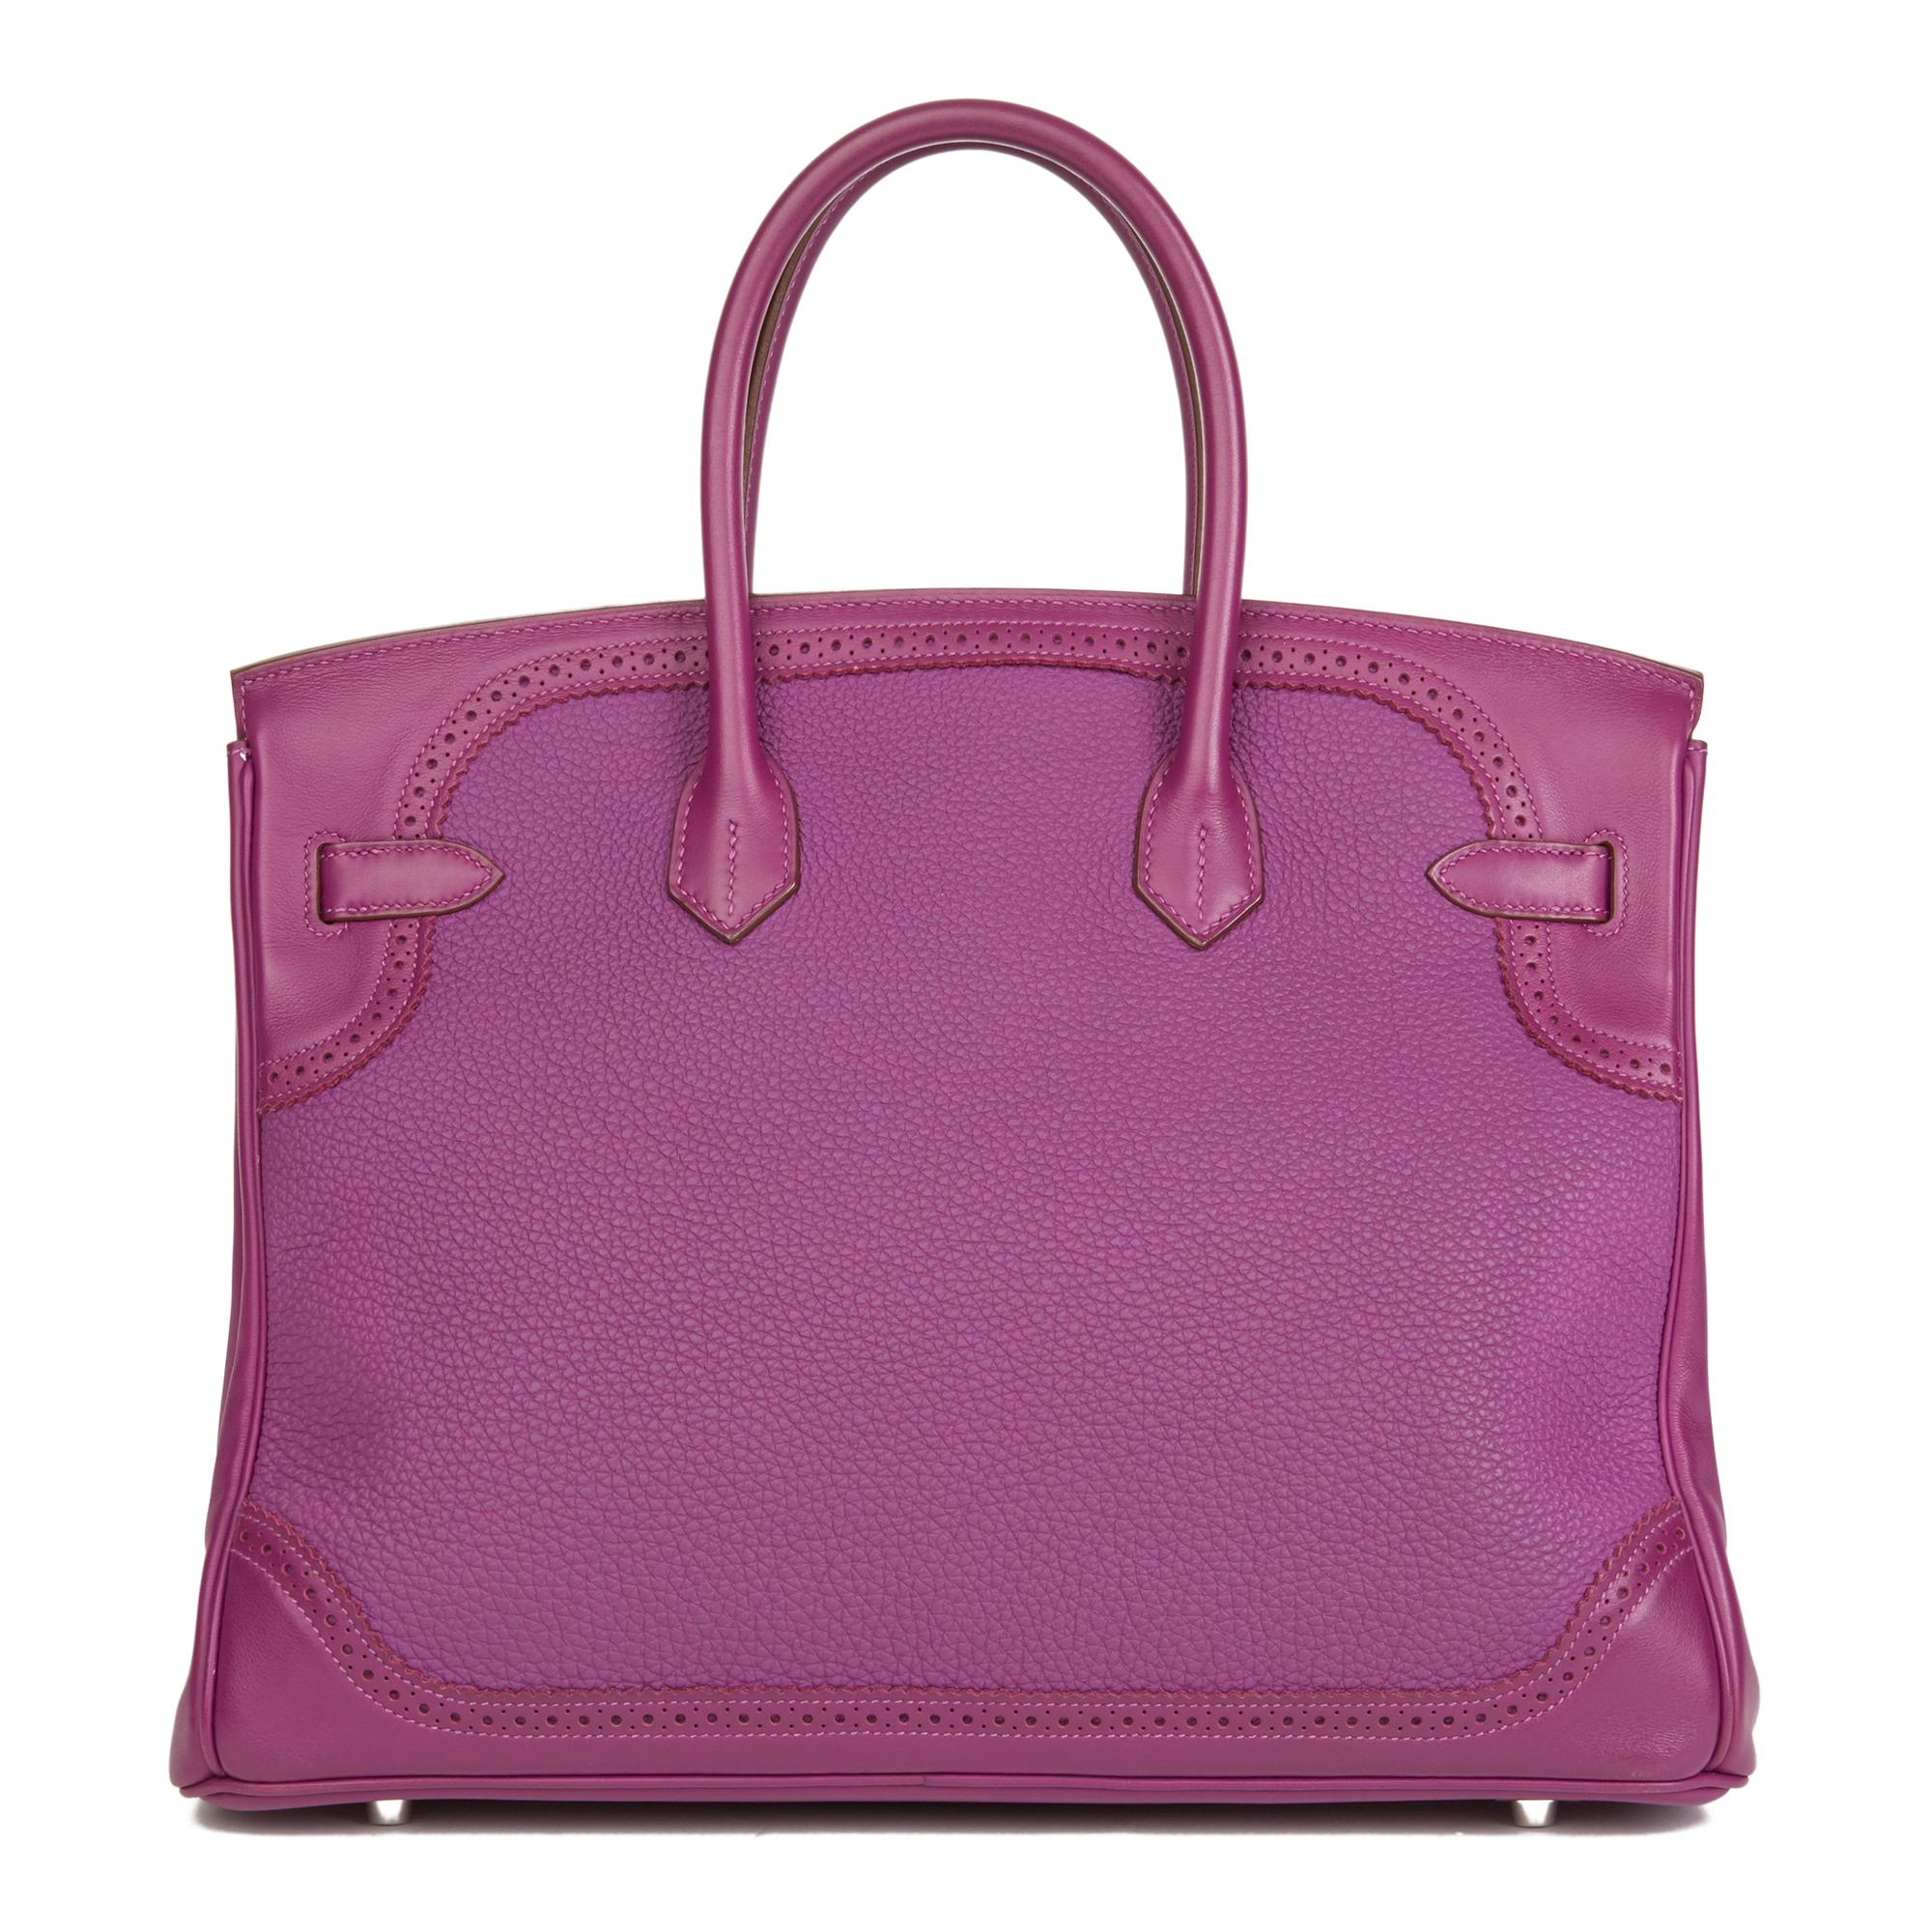 Pink 2015 Hermes Anemone Togo & Swift Leather Ghillies Birkin 35cm